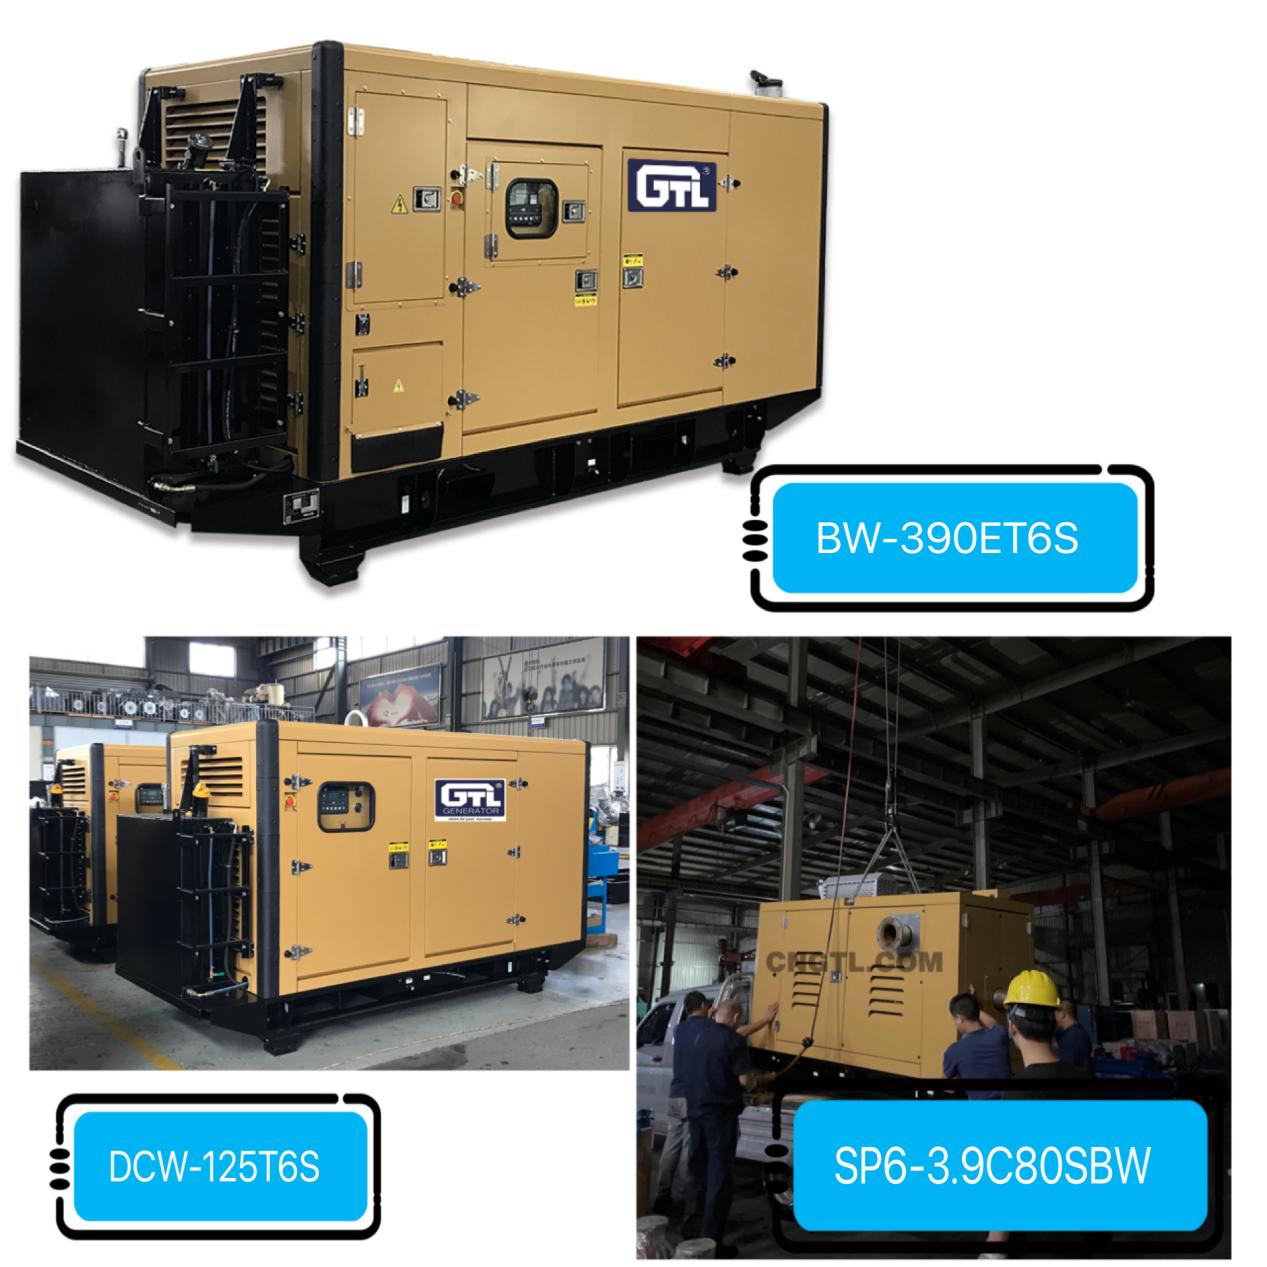 GTL Reliable Diesel Driven Self-priming sewage pump  SP6-3.9C80S and three diesel generators Delivery to Korea